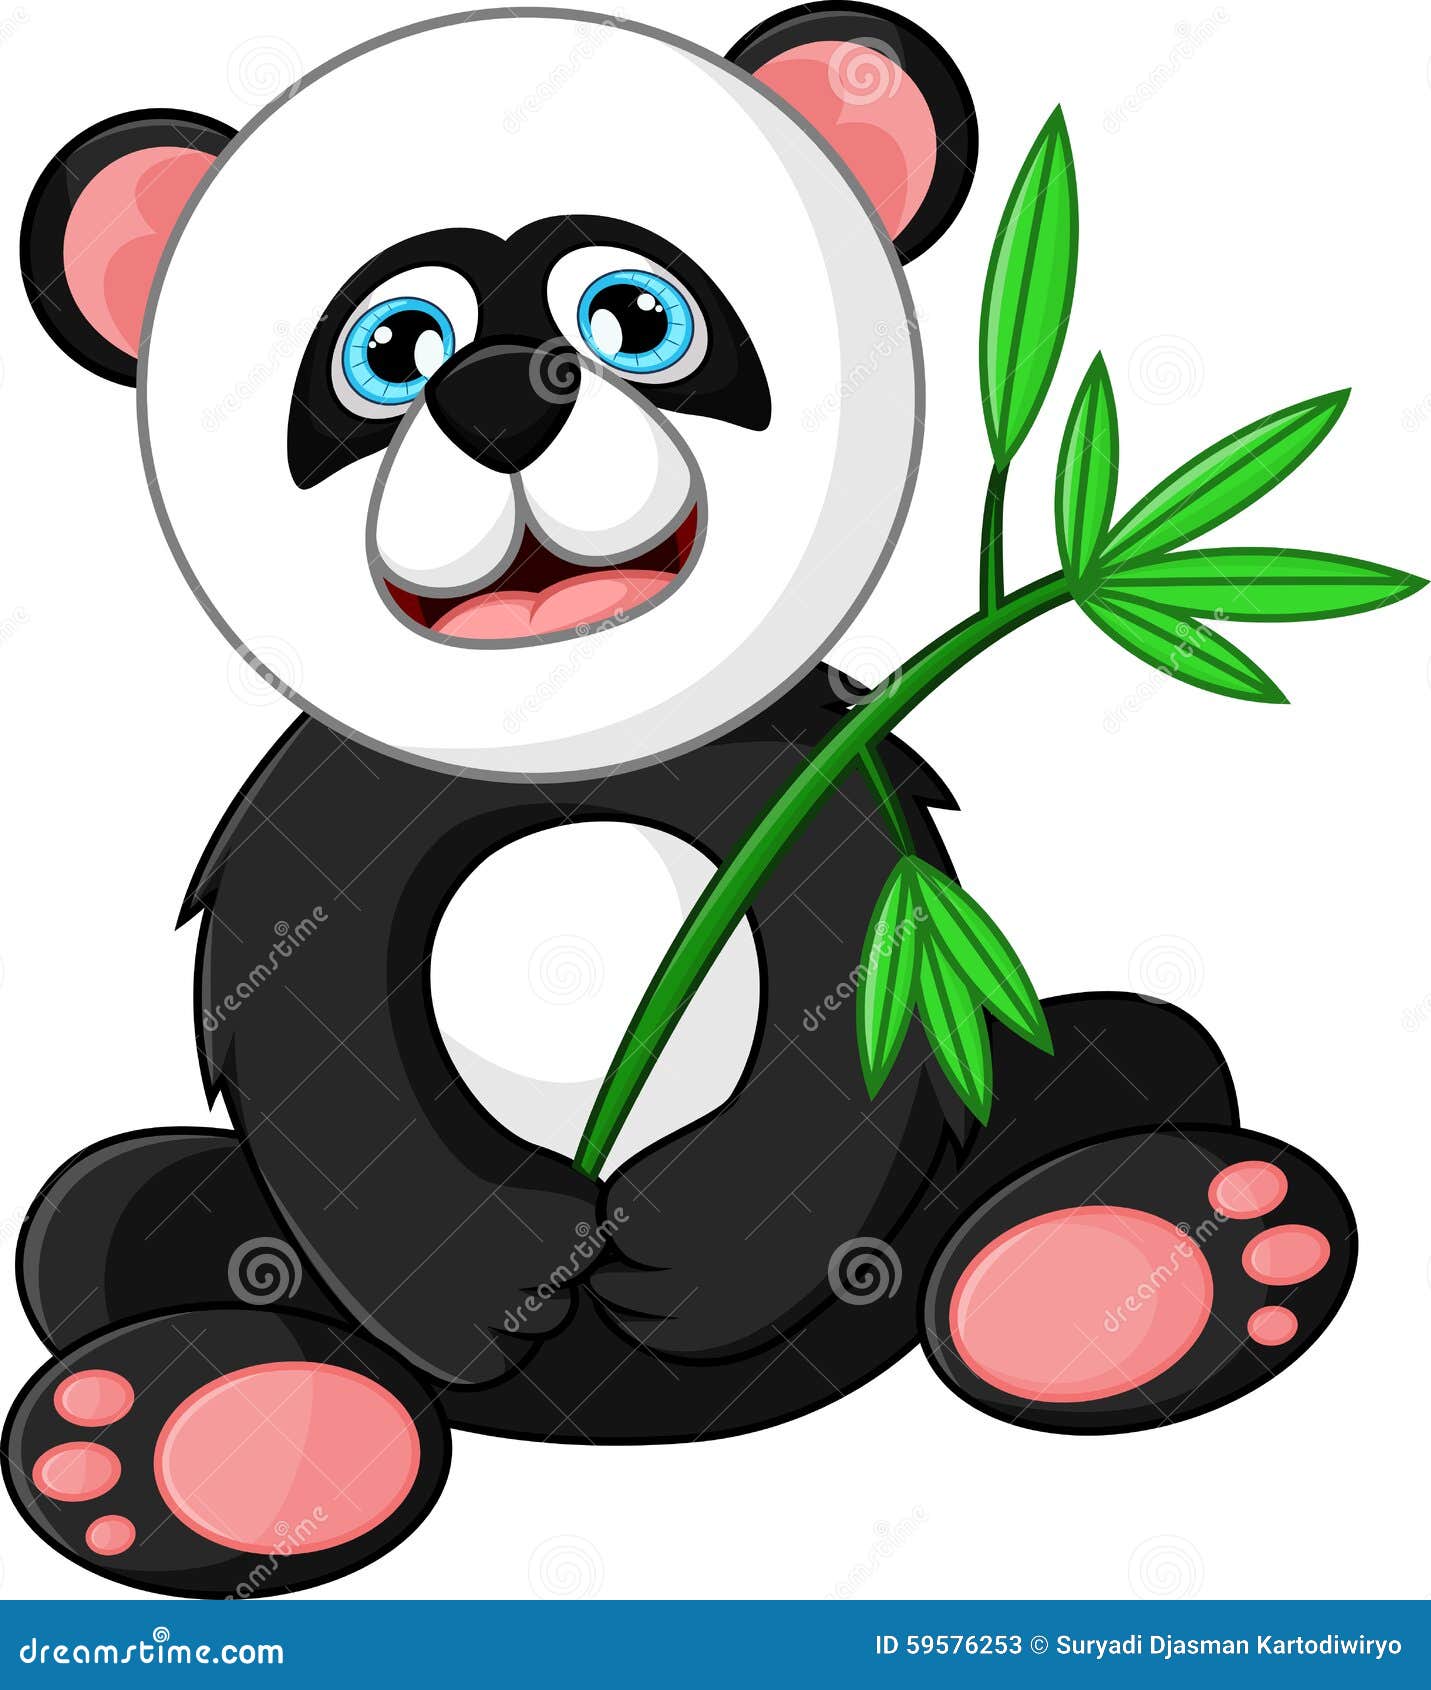 Cartoon Happy Panda Holding Bamboo Stock Vector - Illustration of ...